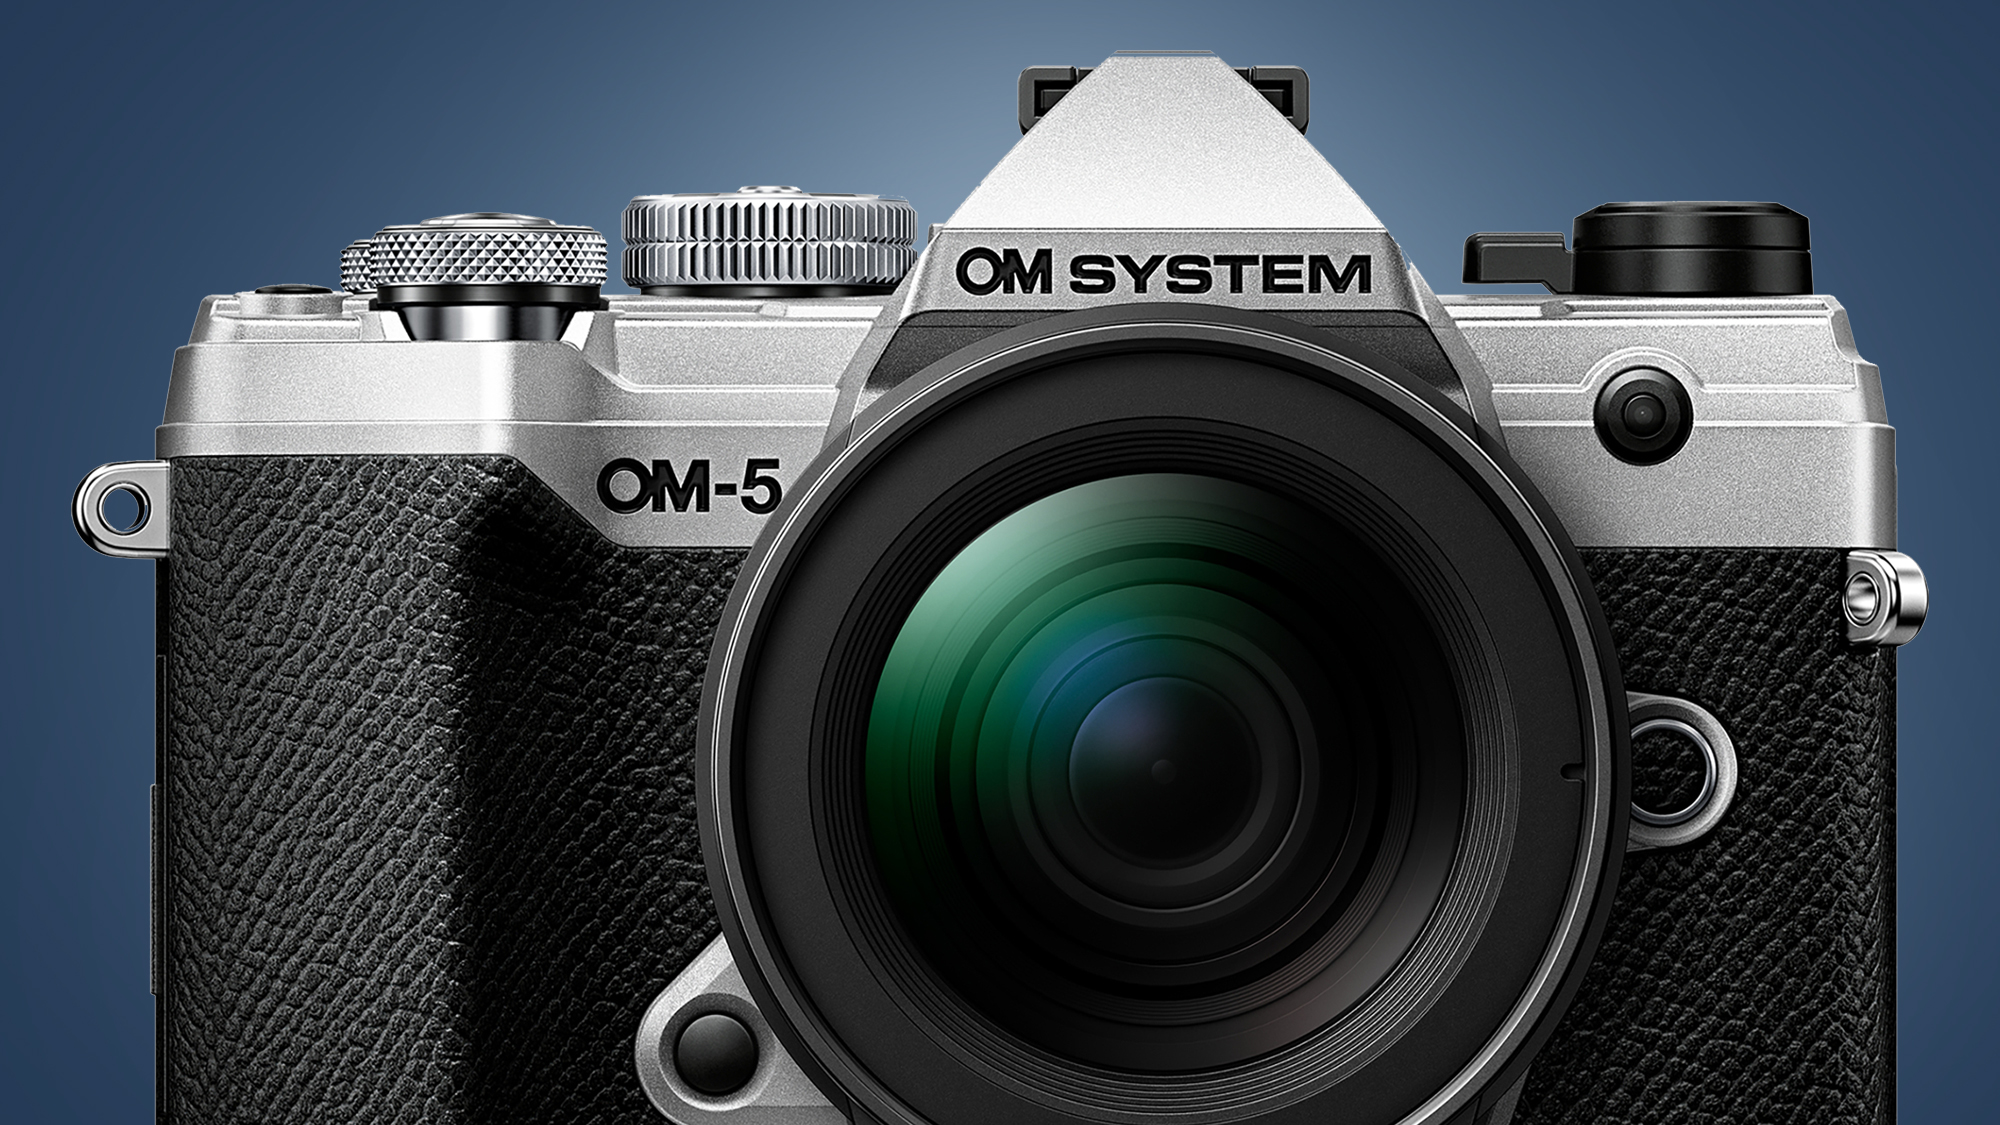 OM System OM-5 дата выпуска, цена, характеристики и особенности